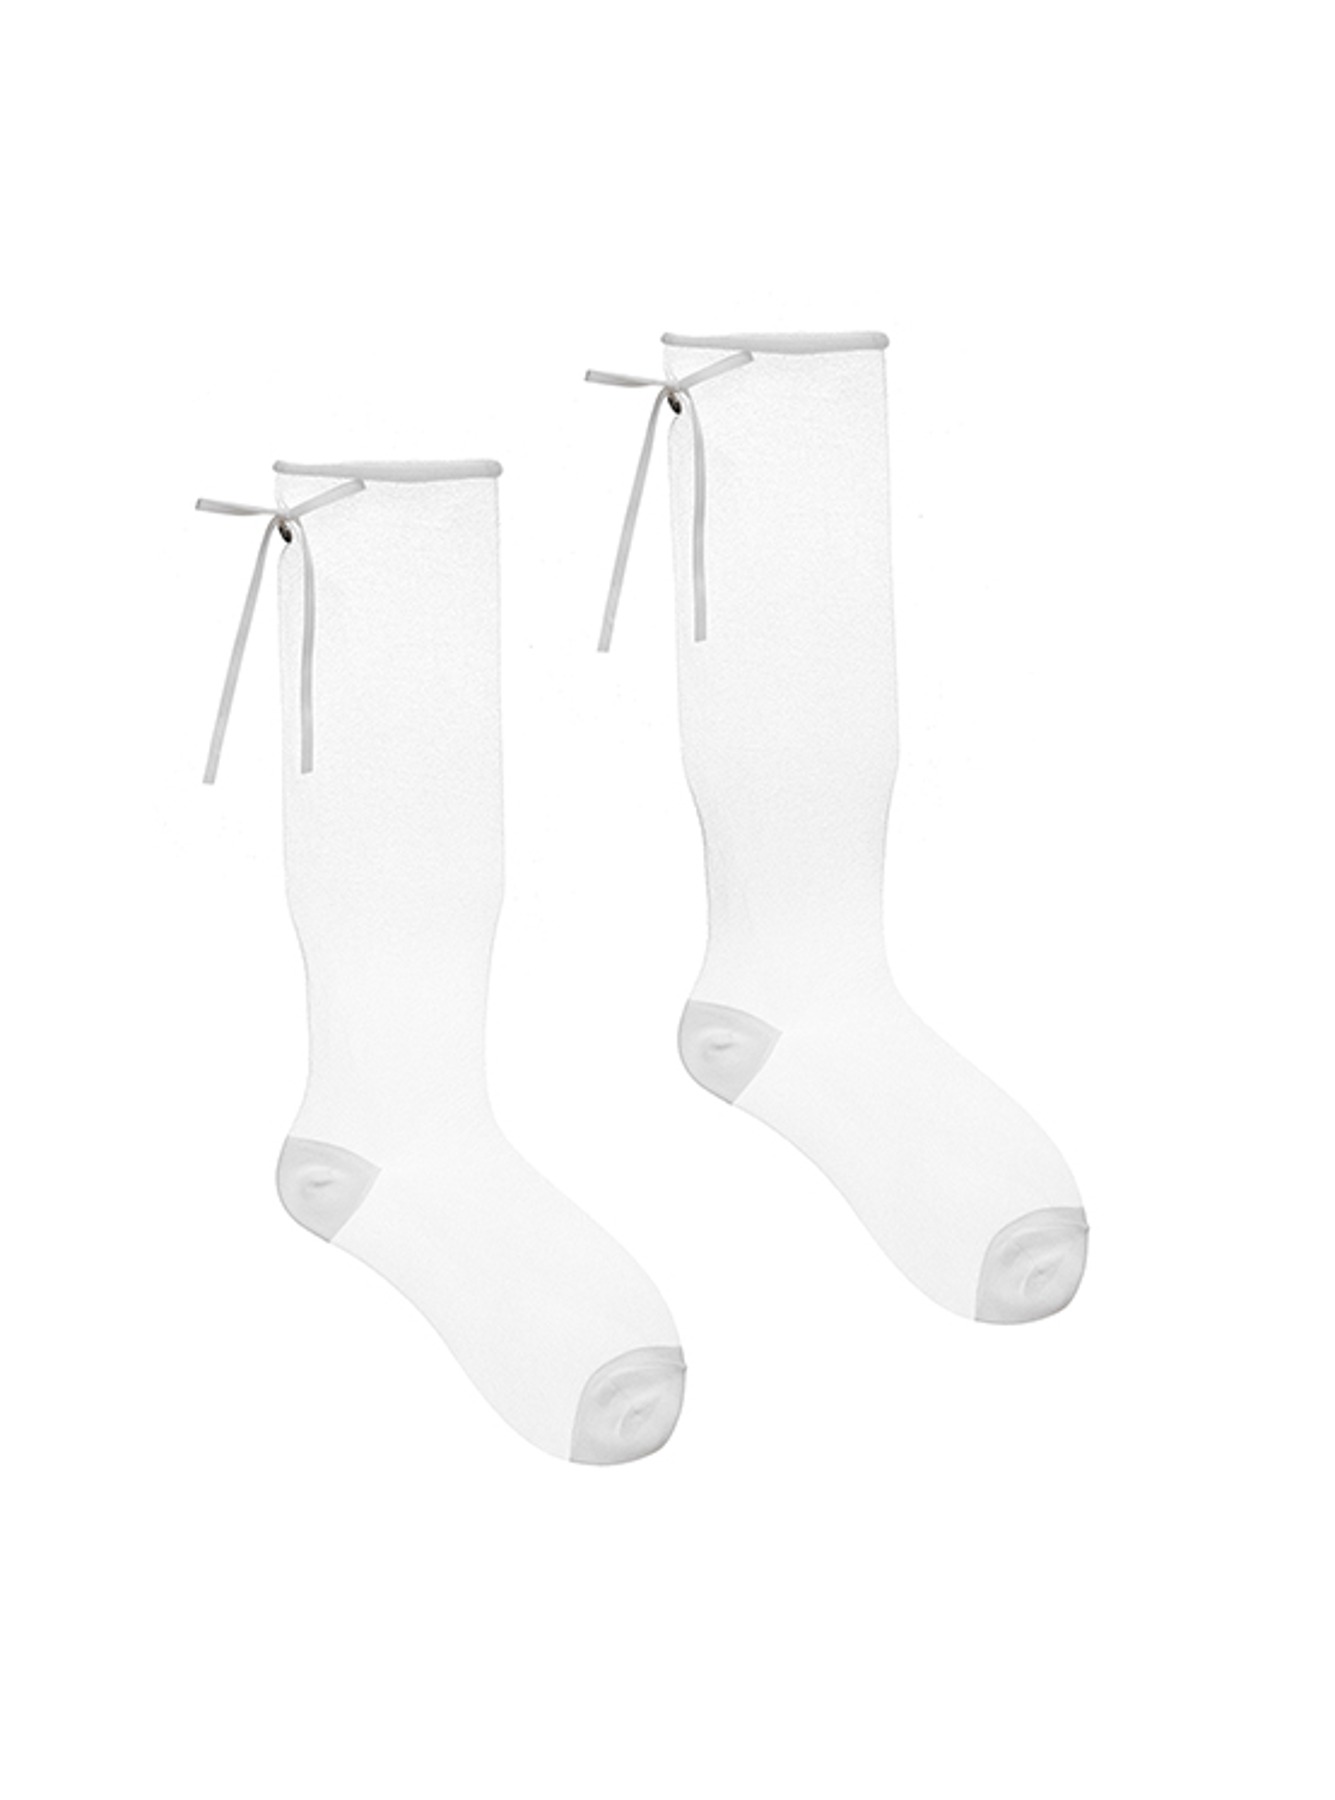 See-through Ribbon Socks in White VX4MK340-01